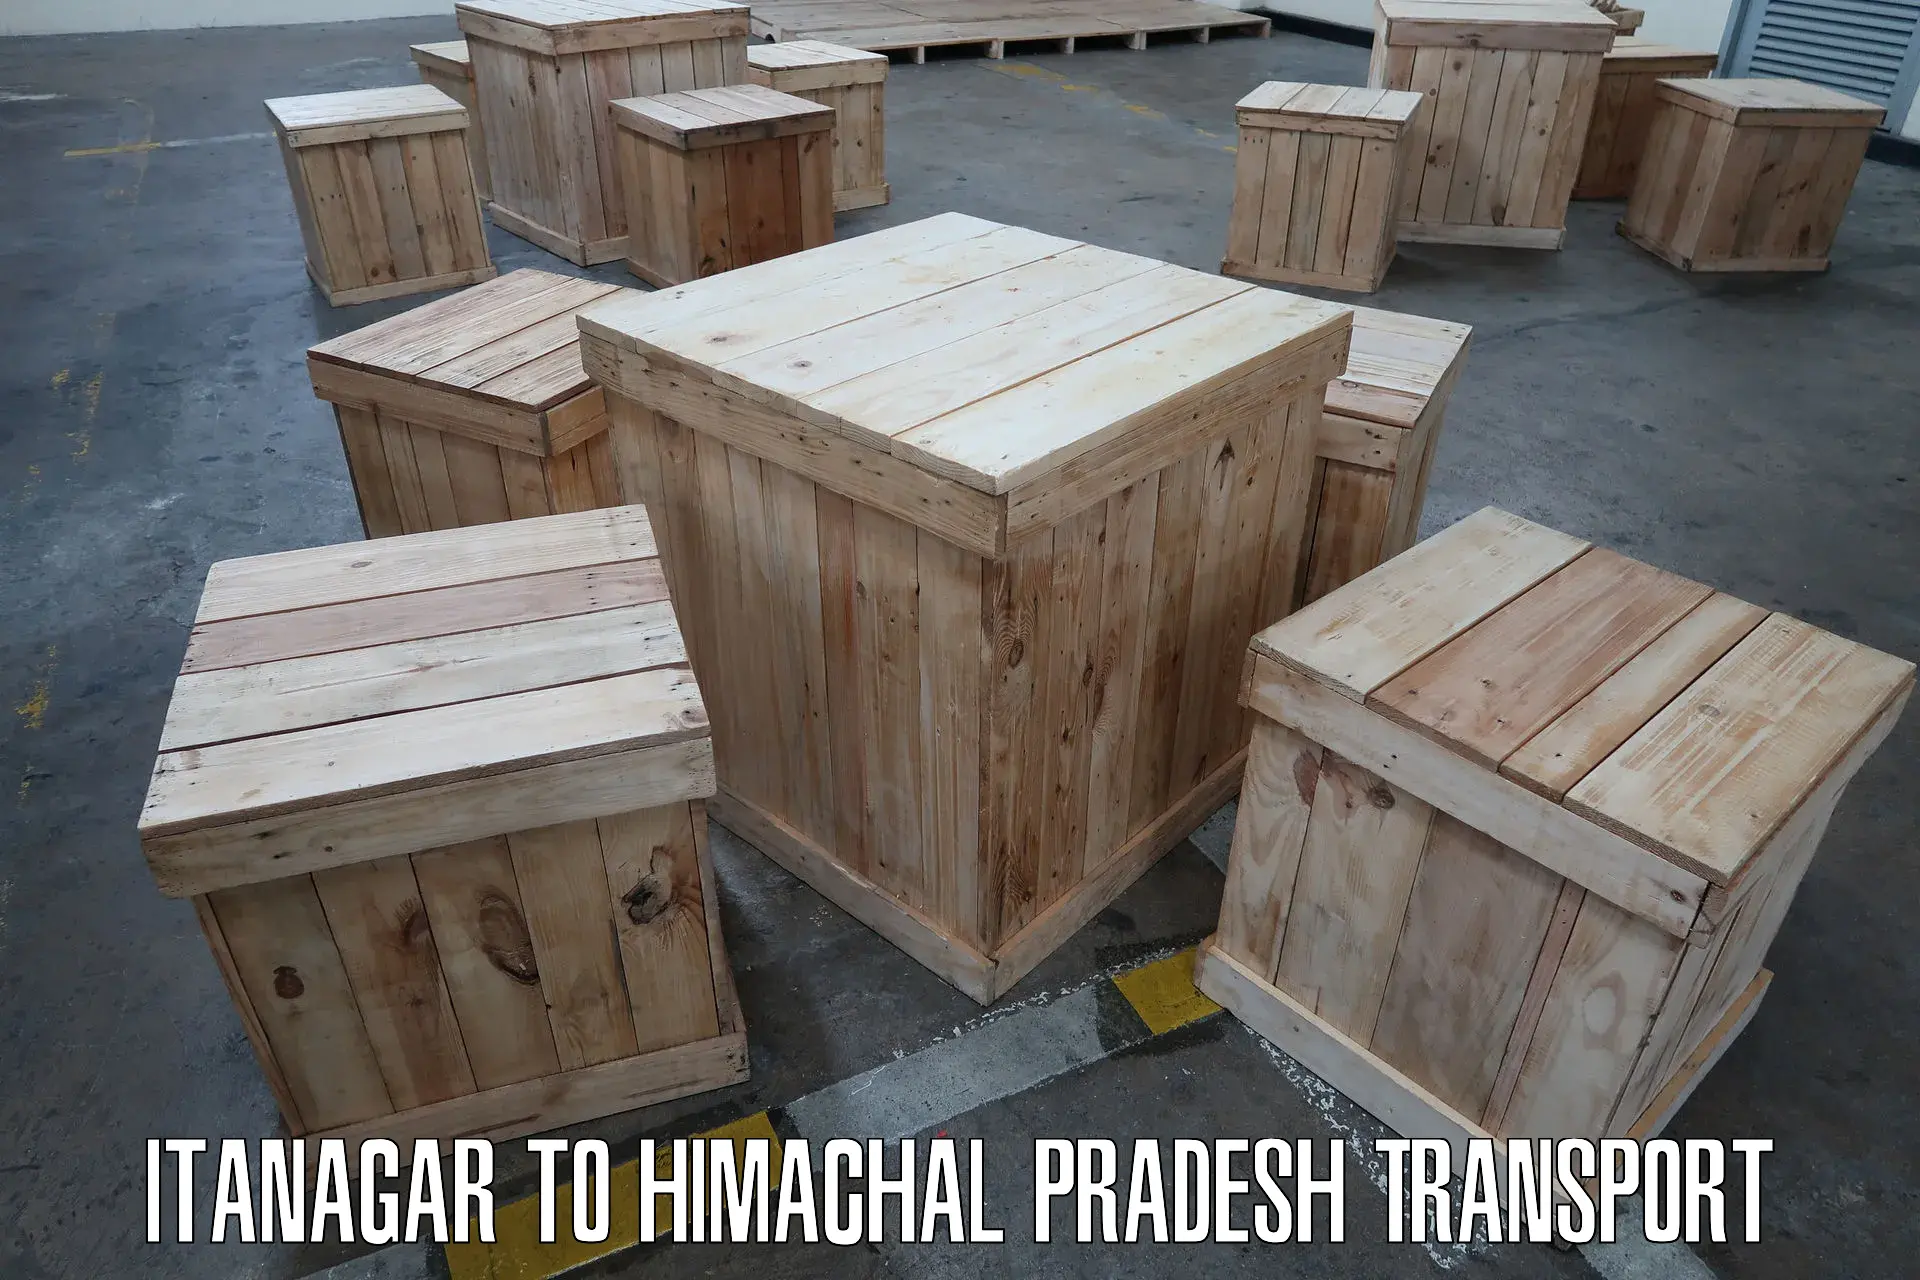 Transport in sharing in Itanagar to Chopal